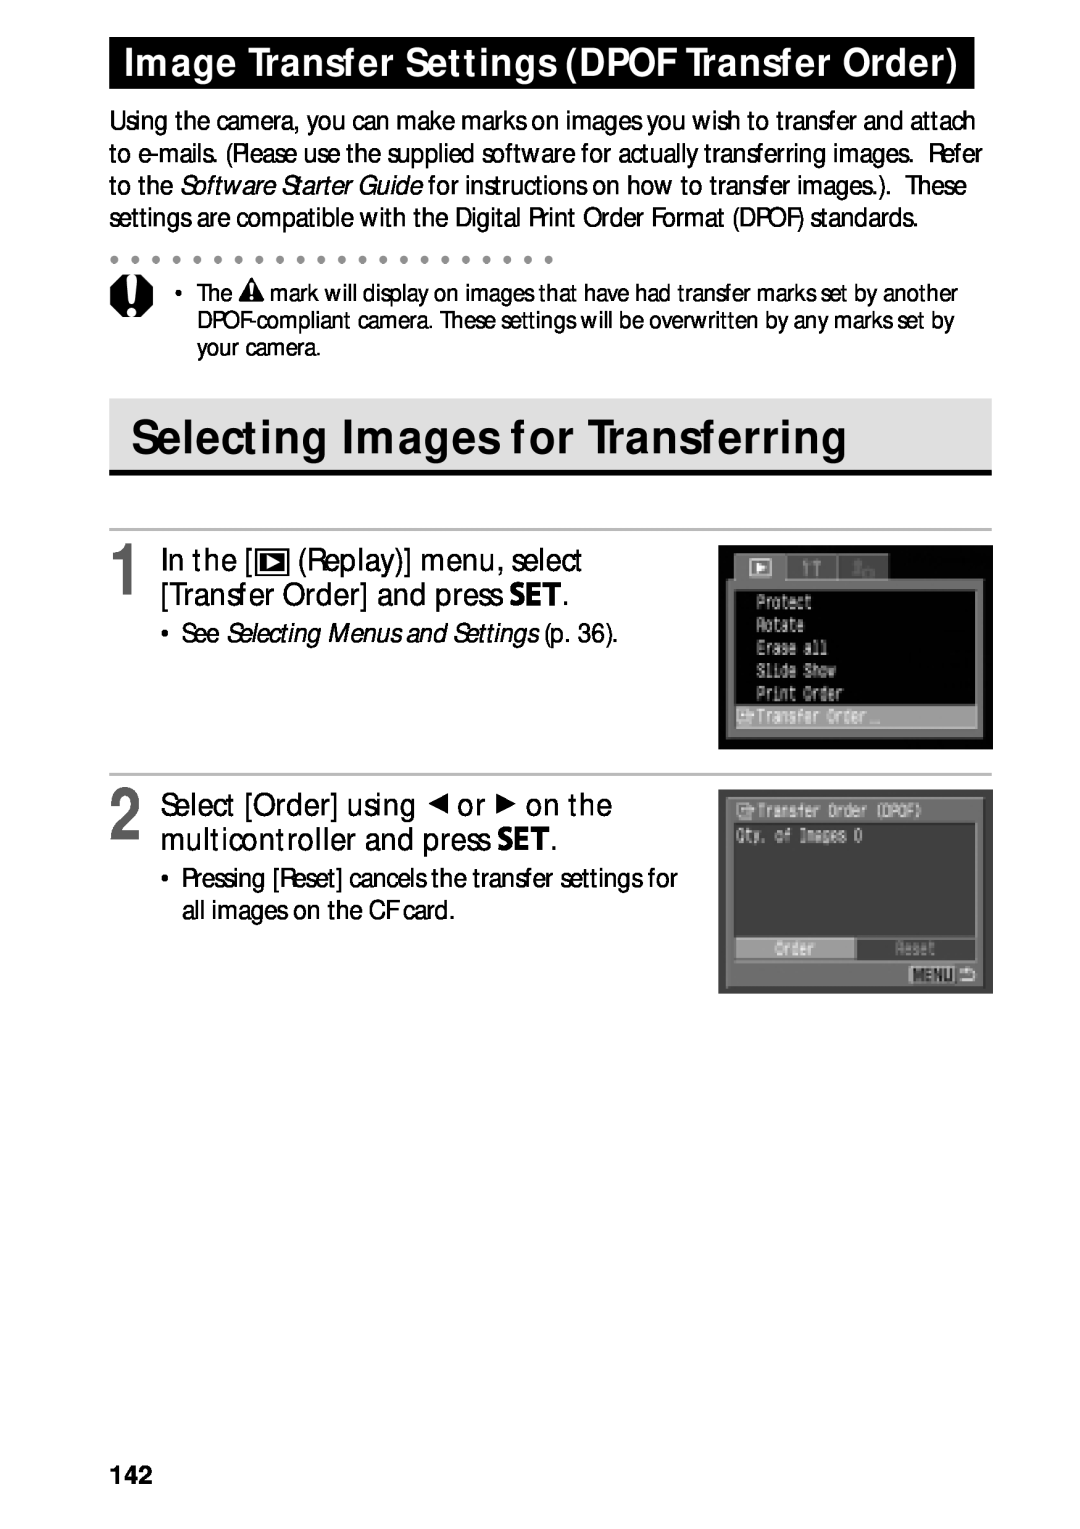 Canon PowerShot S45 manual Selecting Images for Transferring, Image Transfer Settings DPOF Transfer Order 